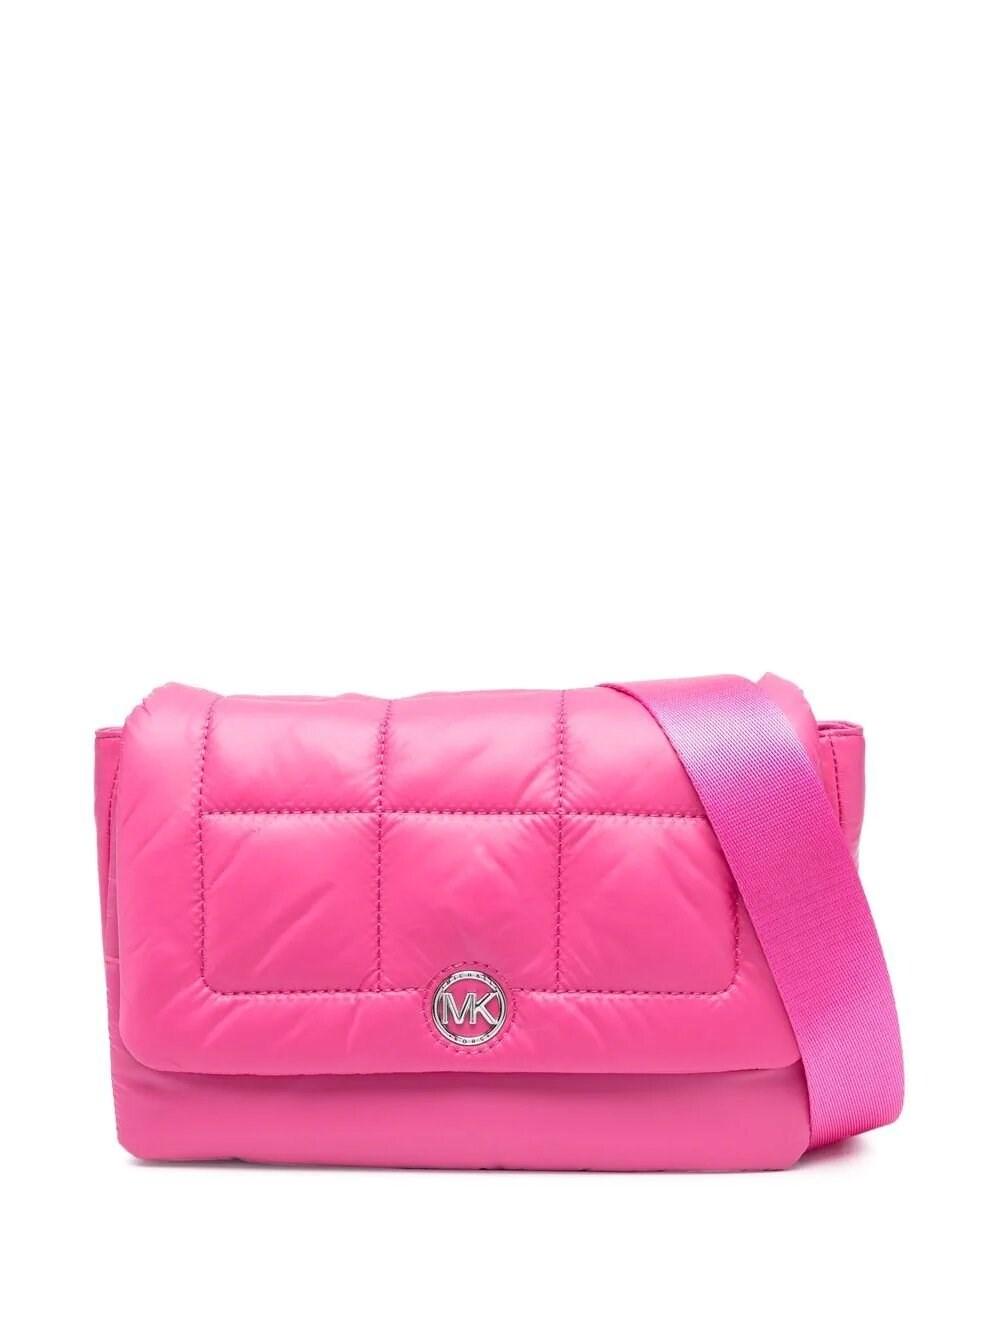 MICHAEL Michael Kors Quilted Shoulder Bag in Pink | Lyst